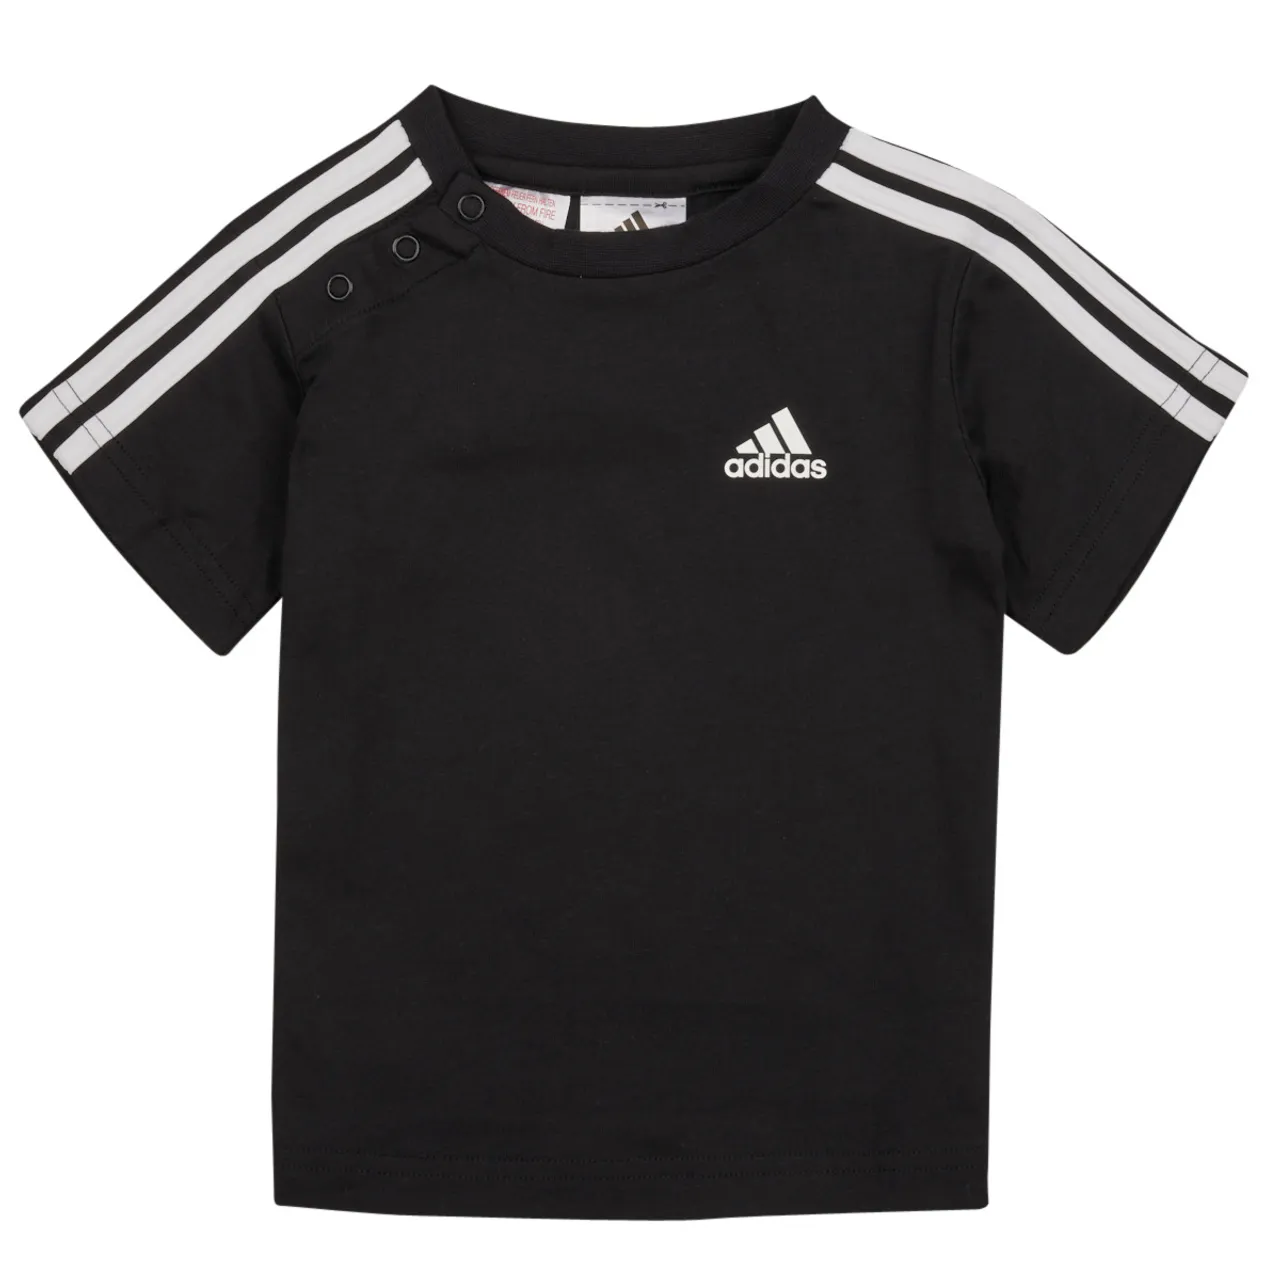 adidas  IB 3S TSHIRT  boys's Children's T shirt in Black